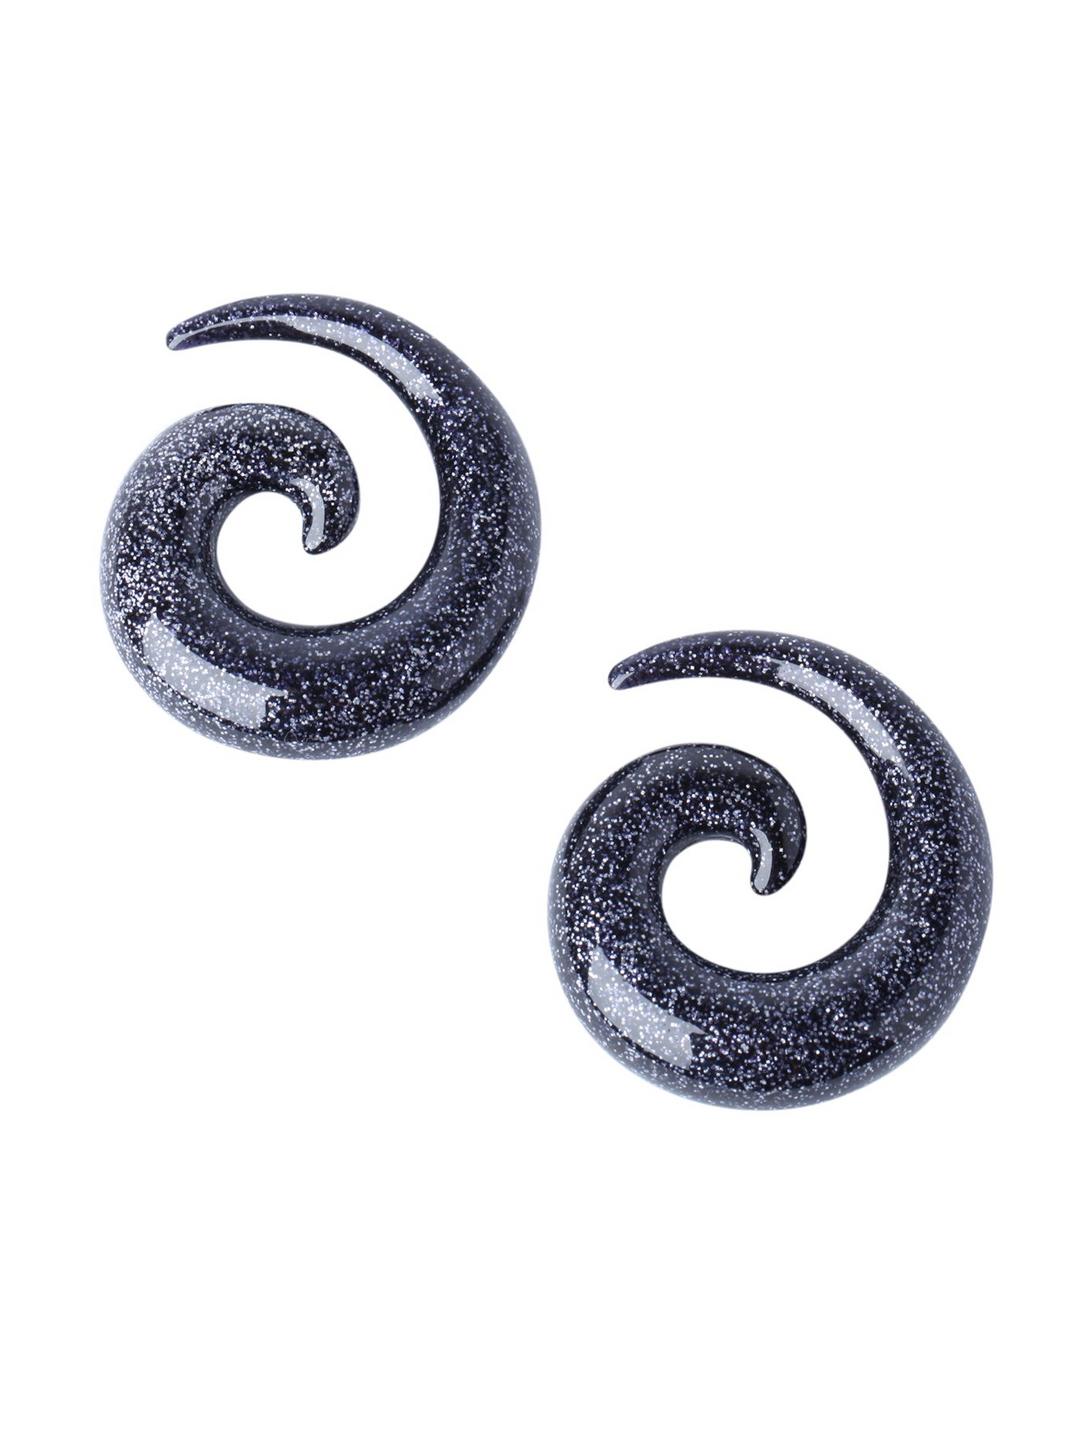 Acrylic Black Glitter Spiral Pincher 2 Pack, BLACK, hi-res